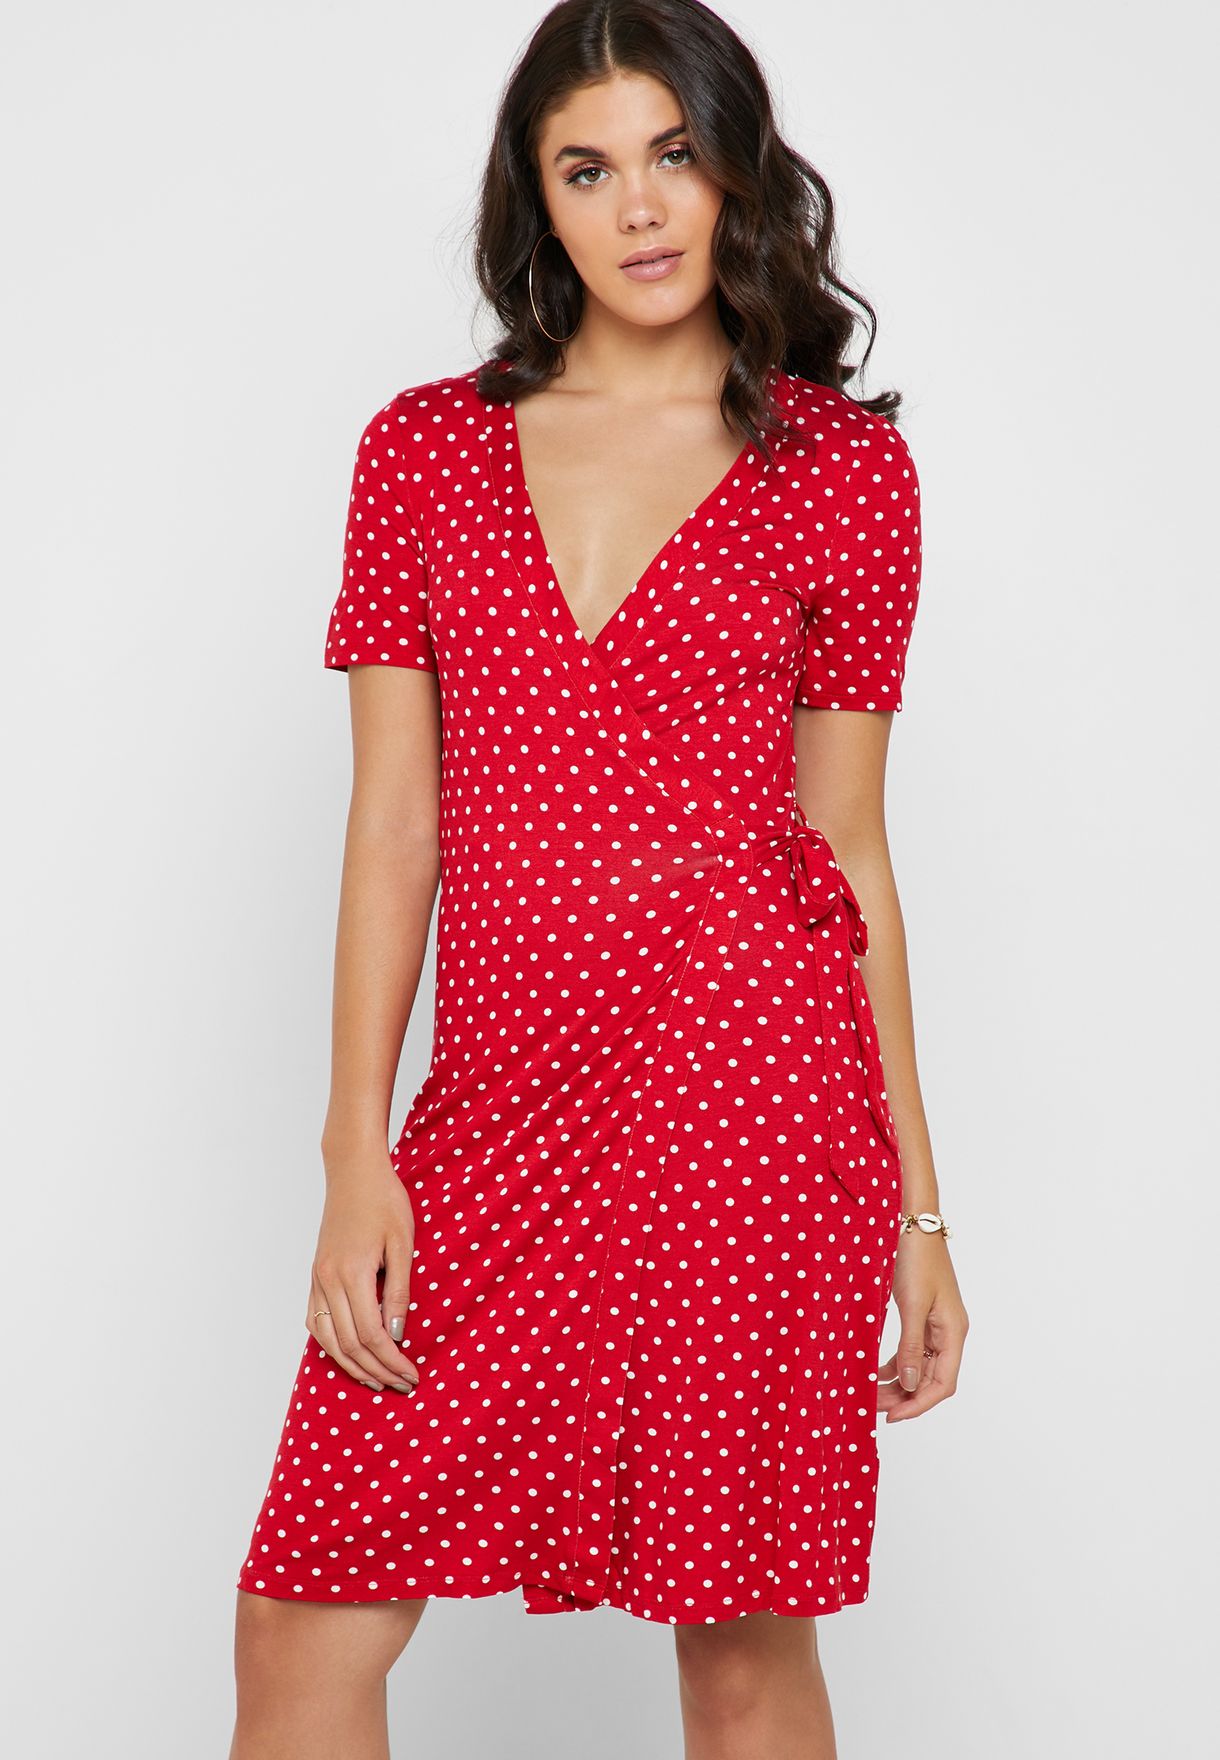 dorothy perkins red polka dot dress